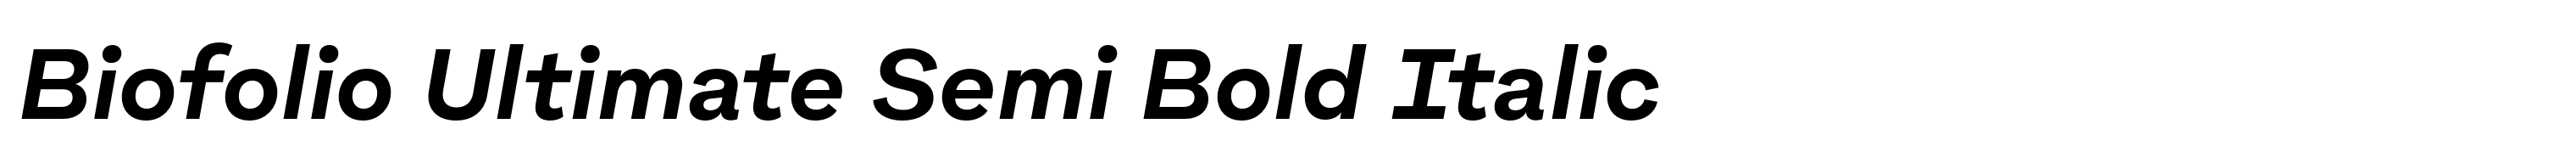 Biofolio Ultimate Semi Bold Italic